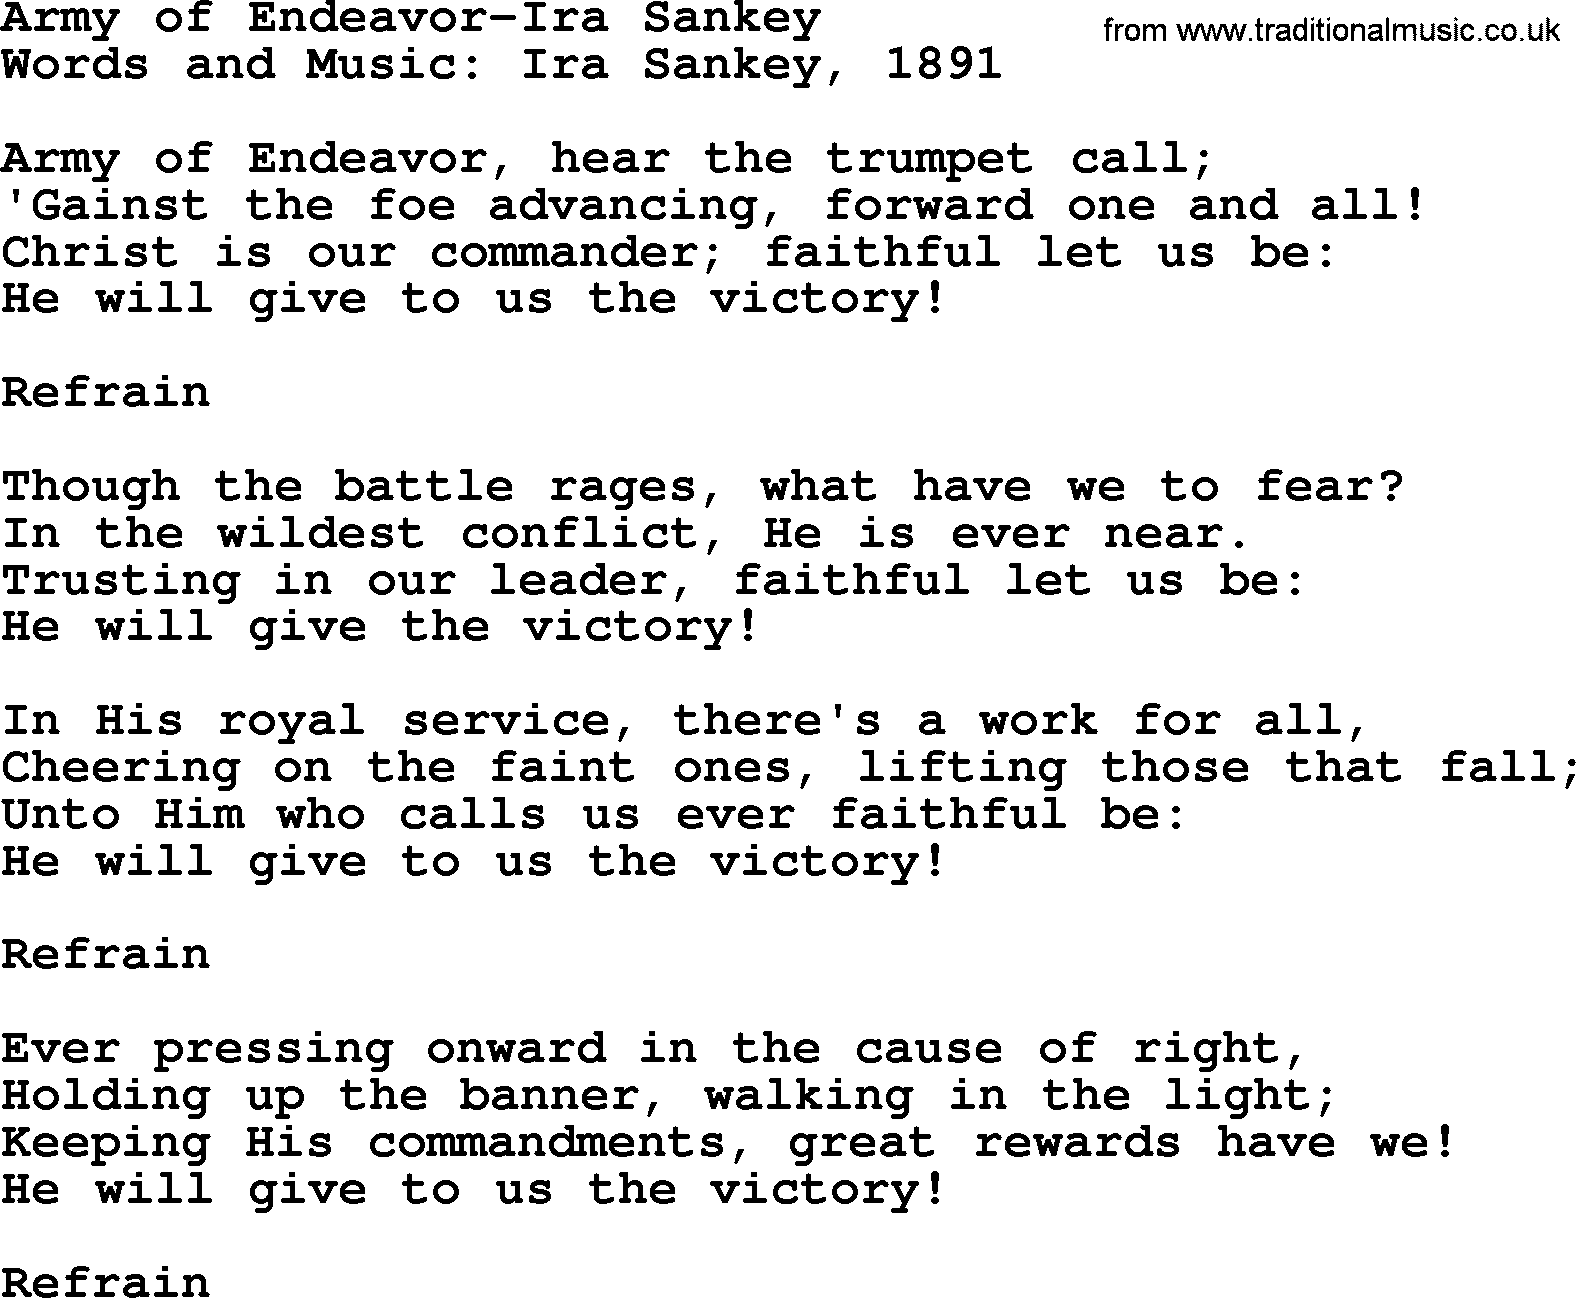 Ira Sankey hymn: Army of Endeavor-Ira Sankey, lyrics